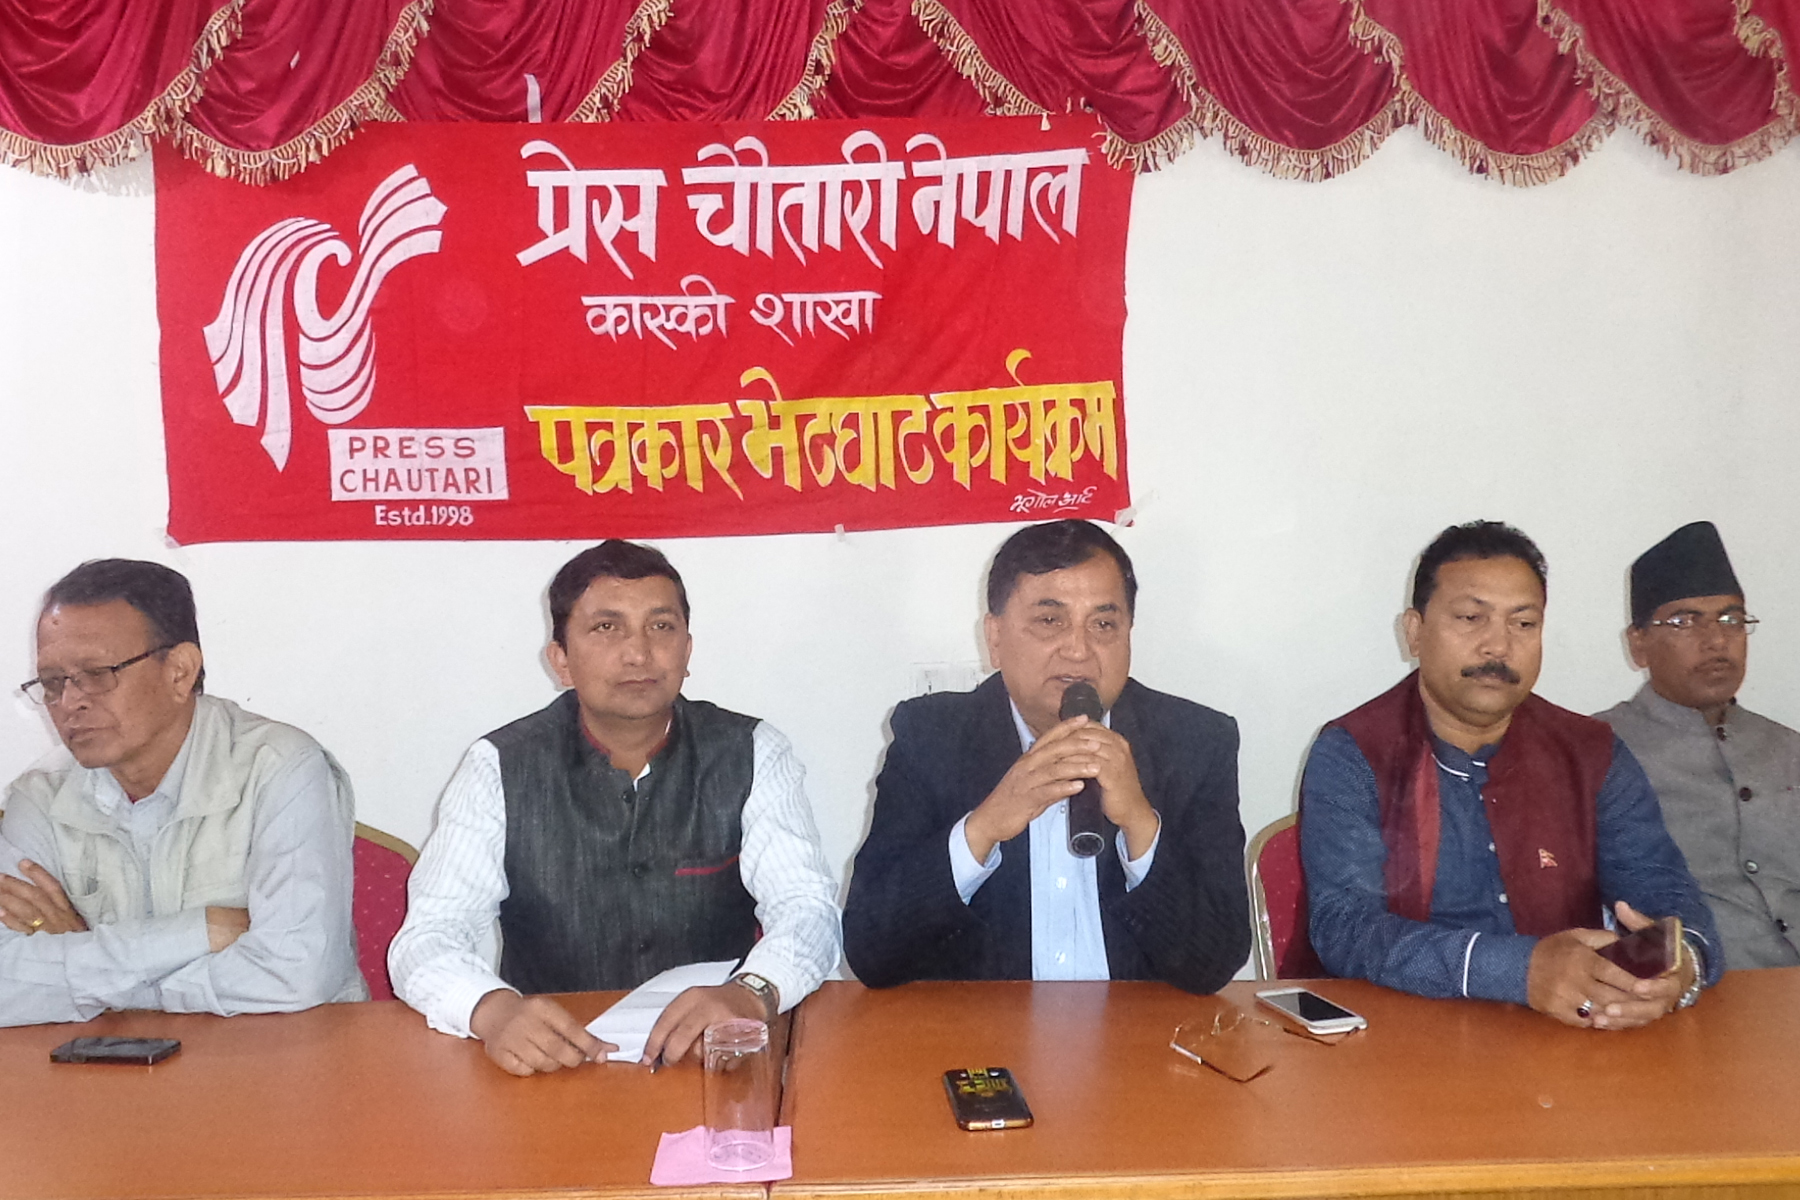 No alternative to elections: Gen Secy Pokharel